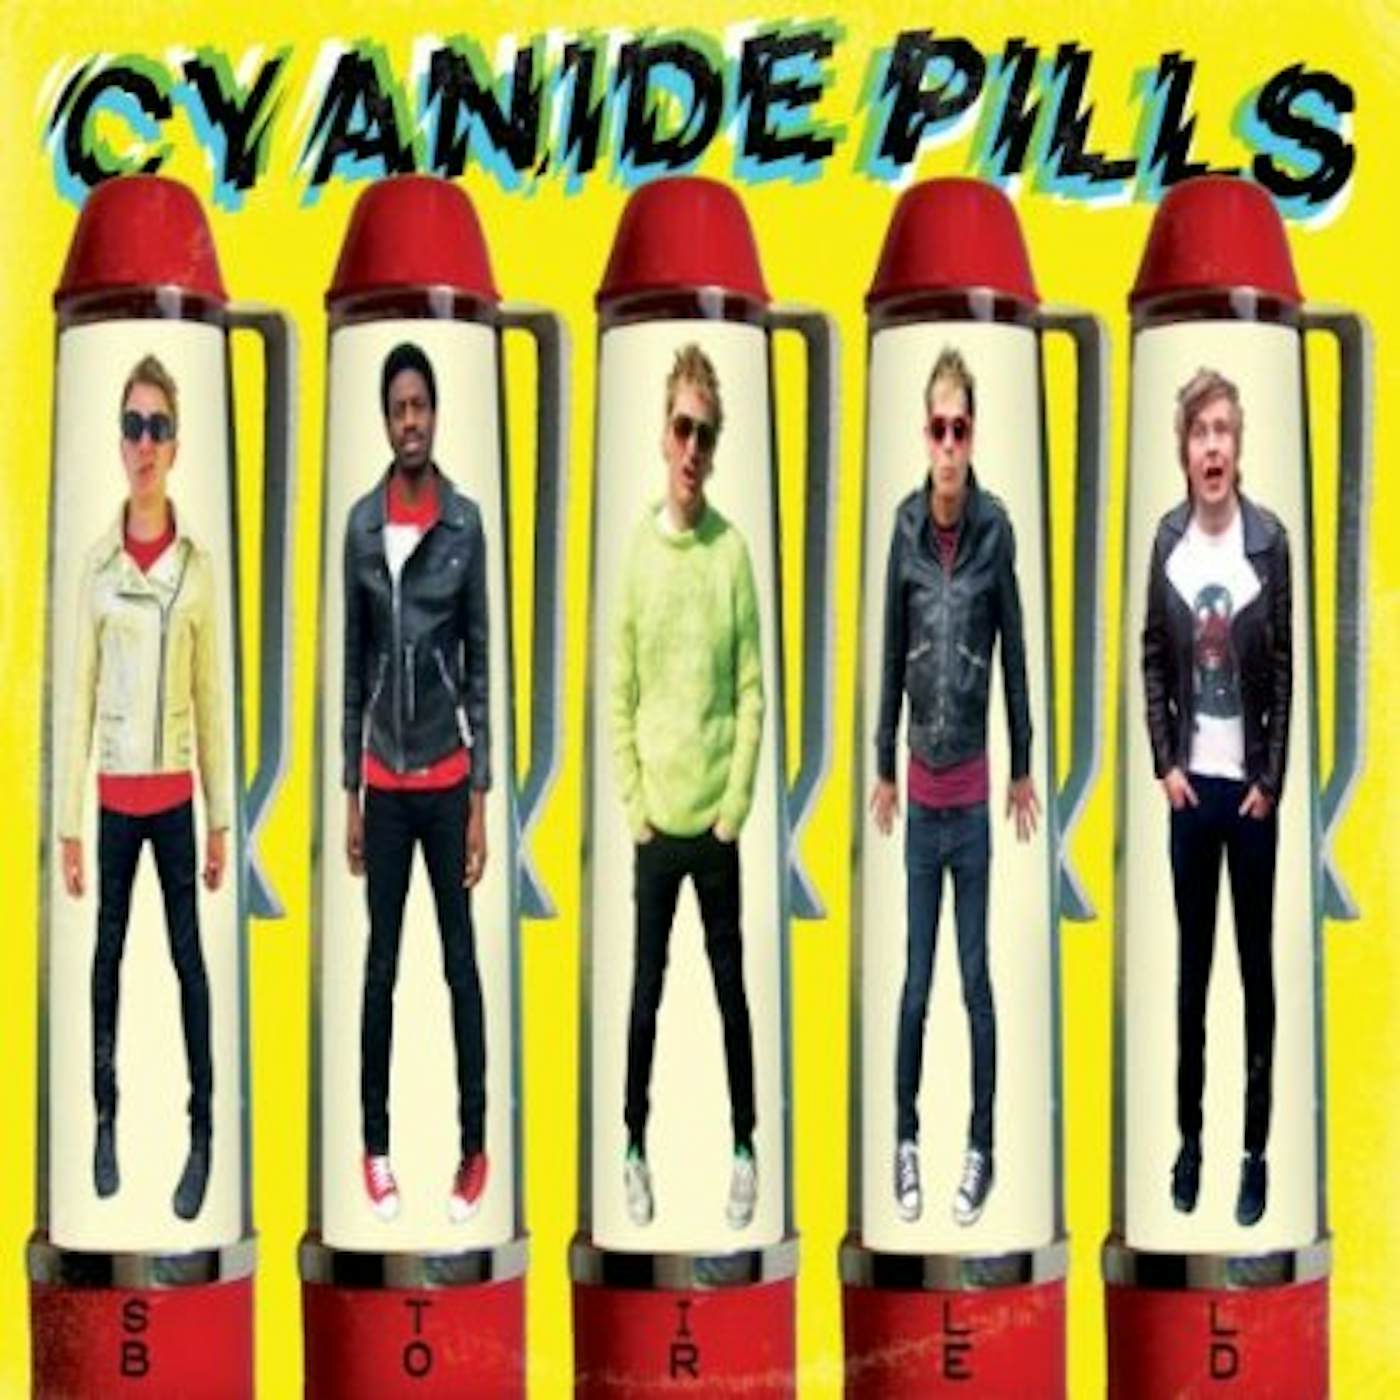 Cyanide Pills STILL BORED CD